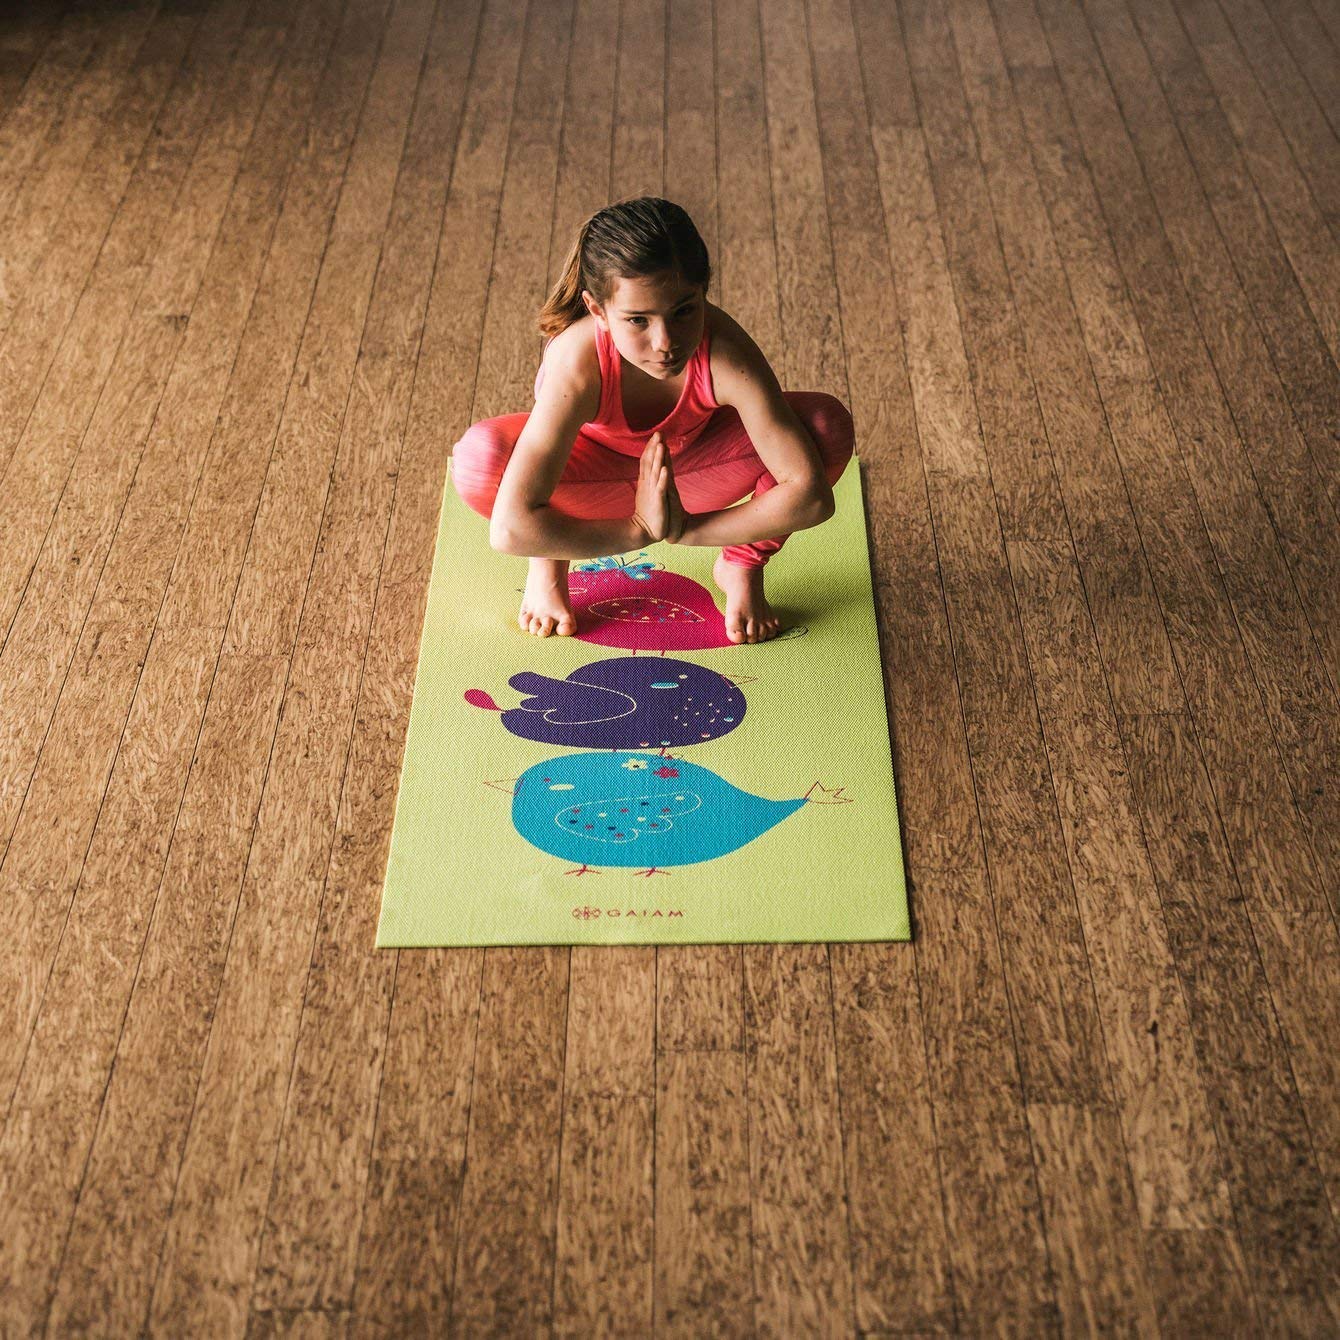 Gaiam Kids Yoga Mat, Birdsong, 4 mm - image 4 of 4